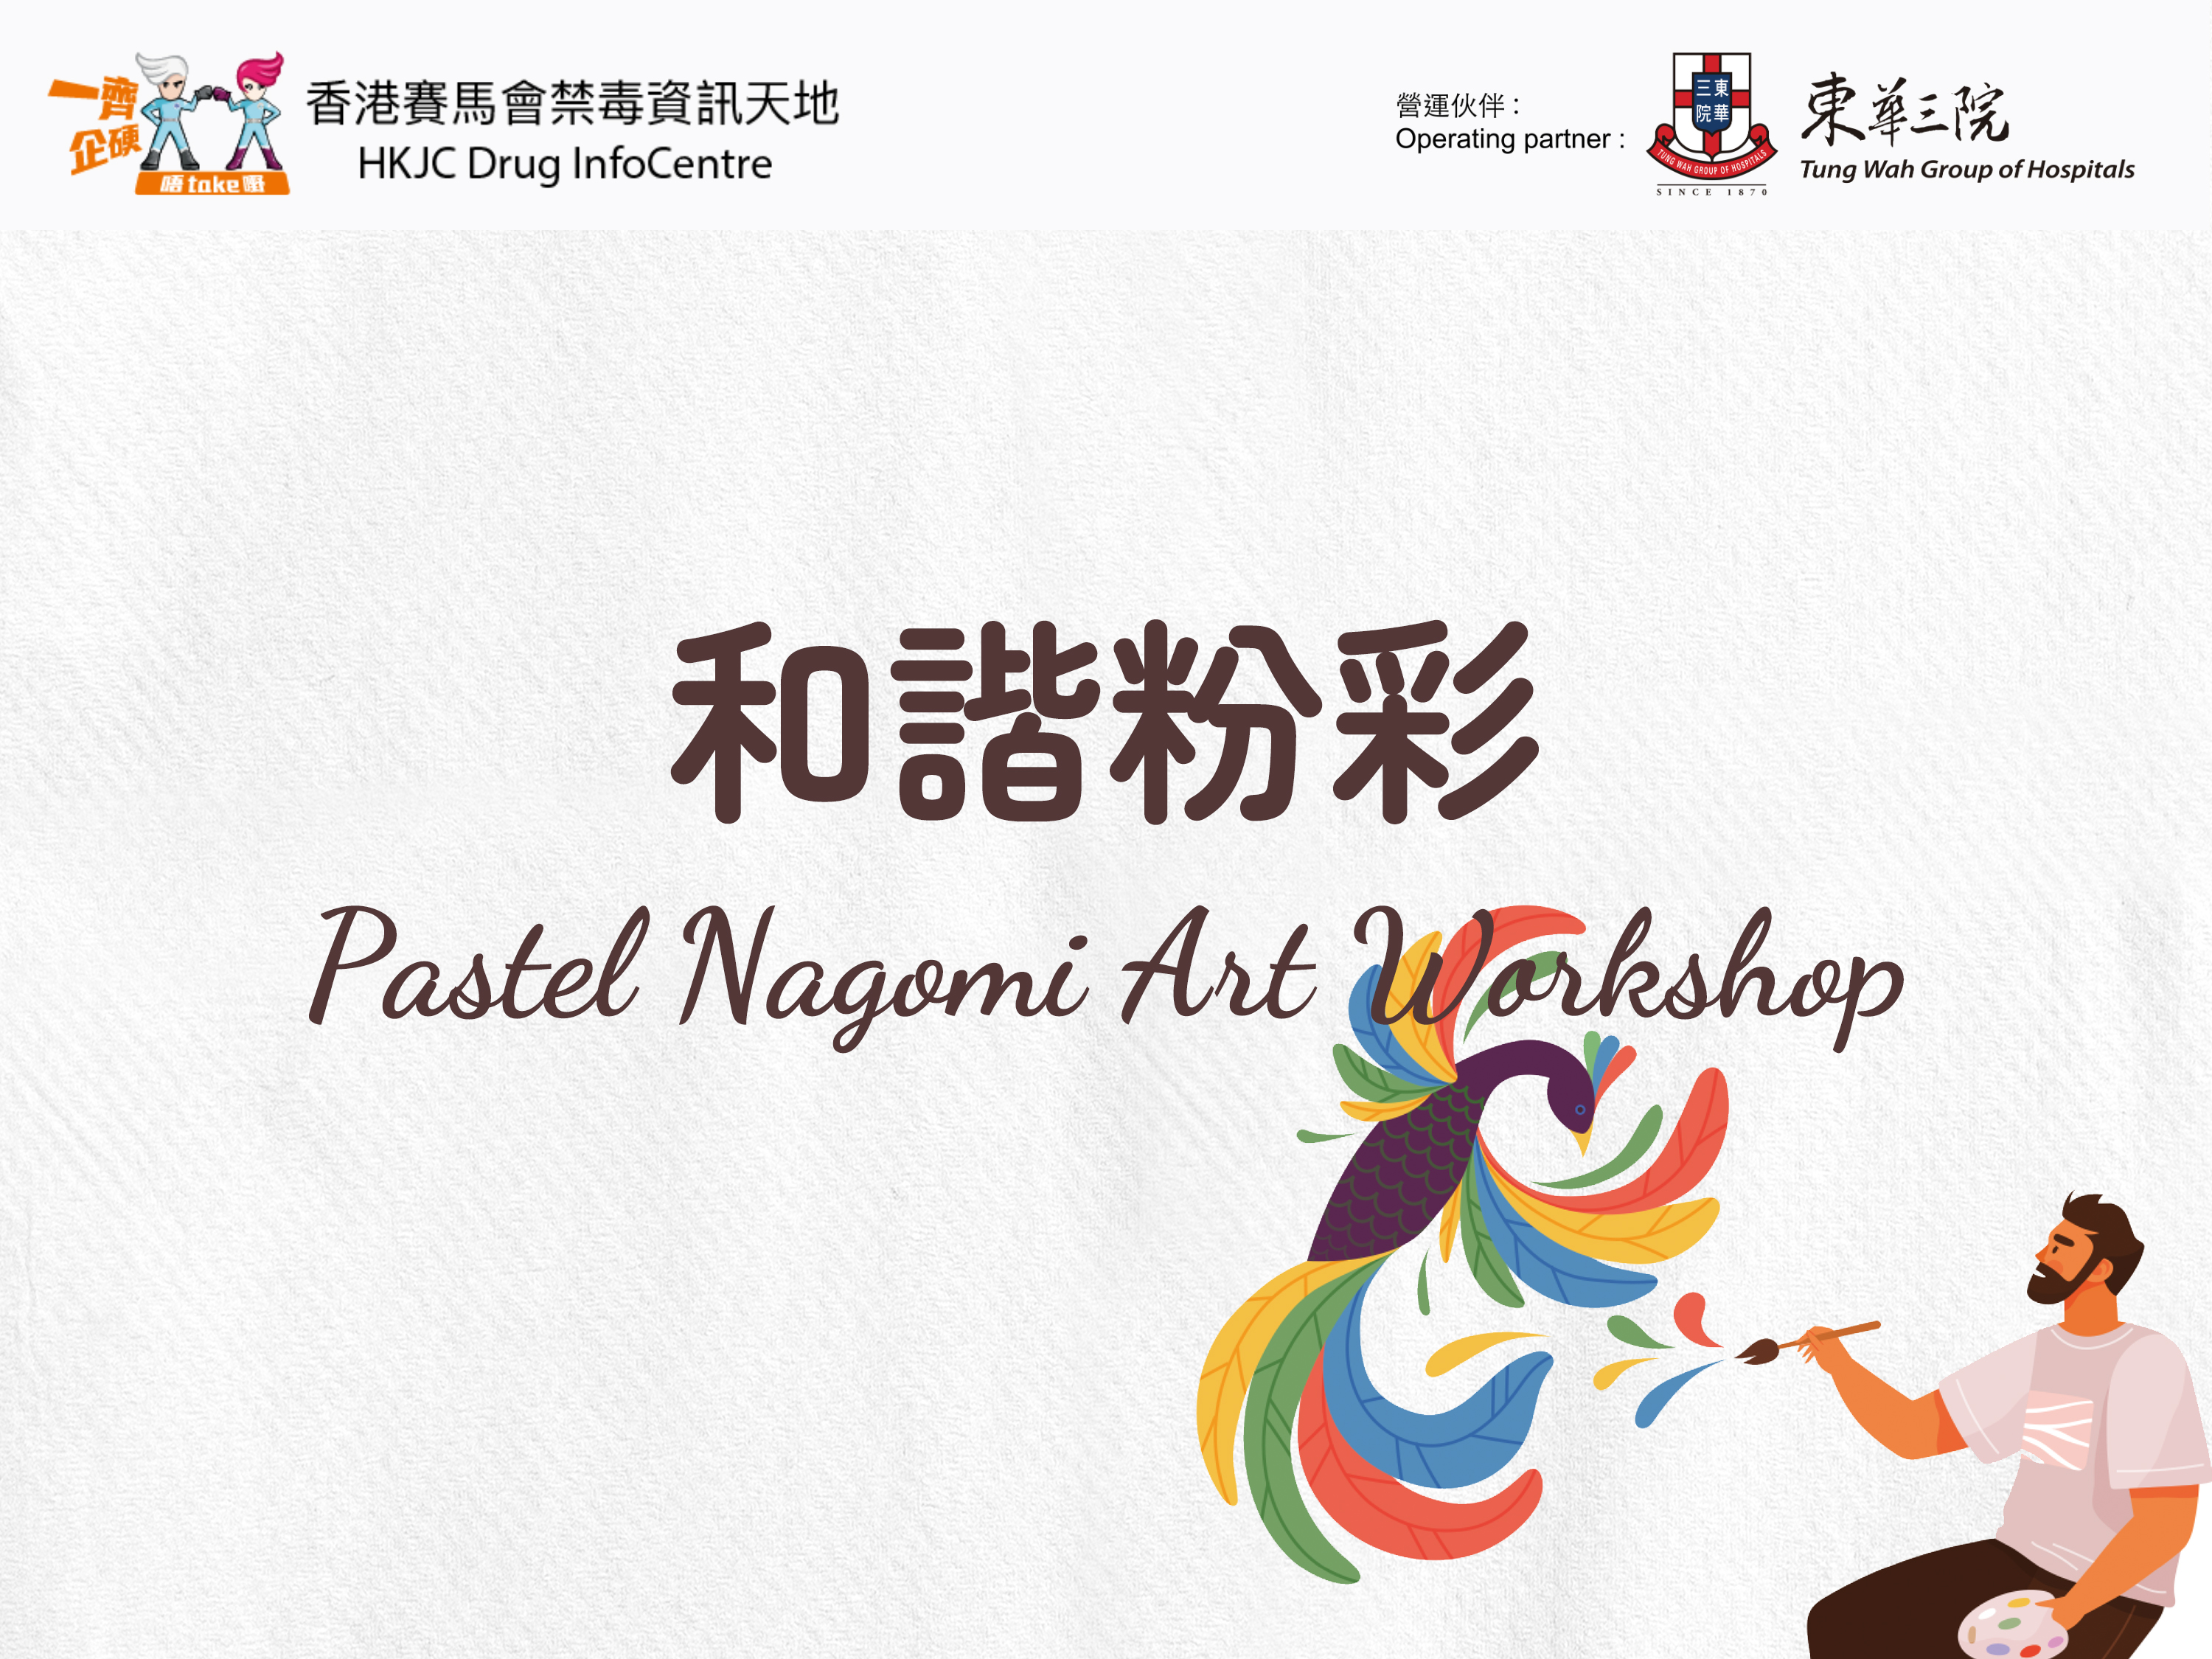 Pastel Nagomi Art Workshop